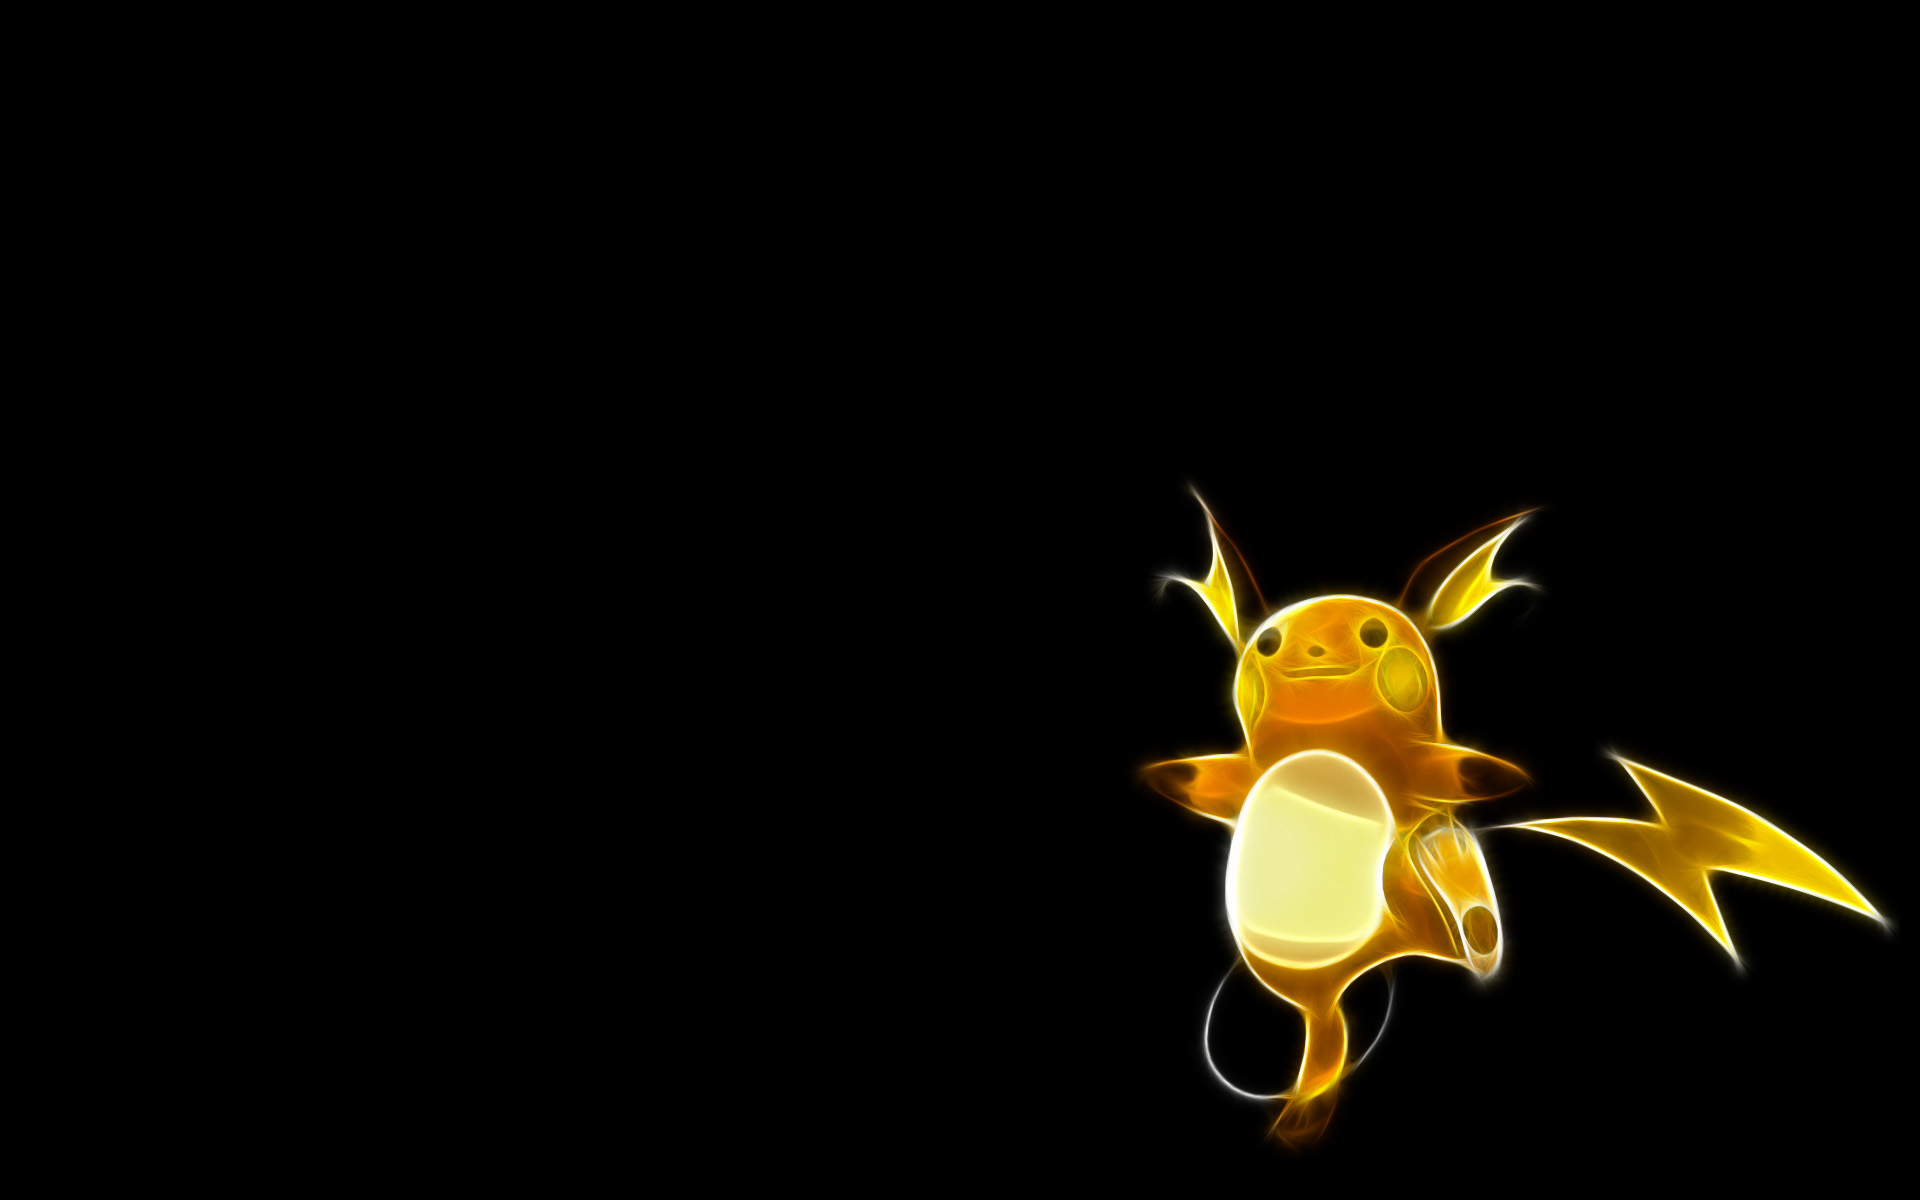 Raichu, a vibrant electric Pokémon from the Pokémon anime series, stands as a captivating desktop wallpaper.